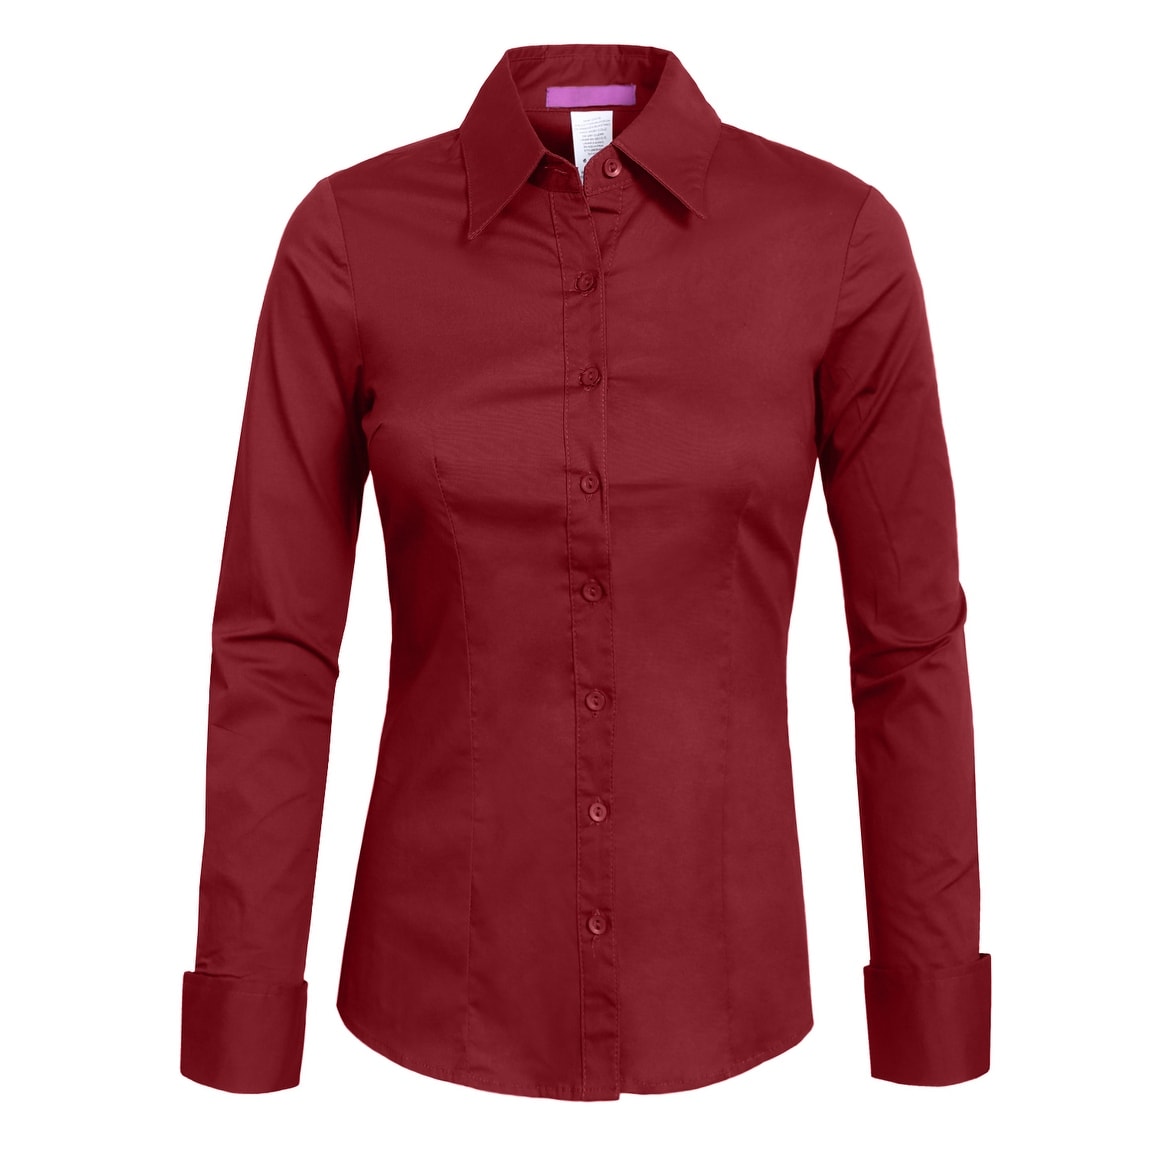 womens red long sleeve button up shirt